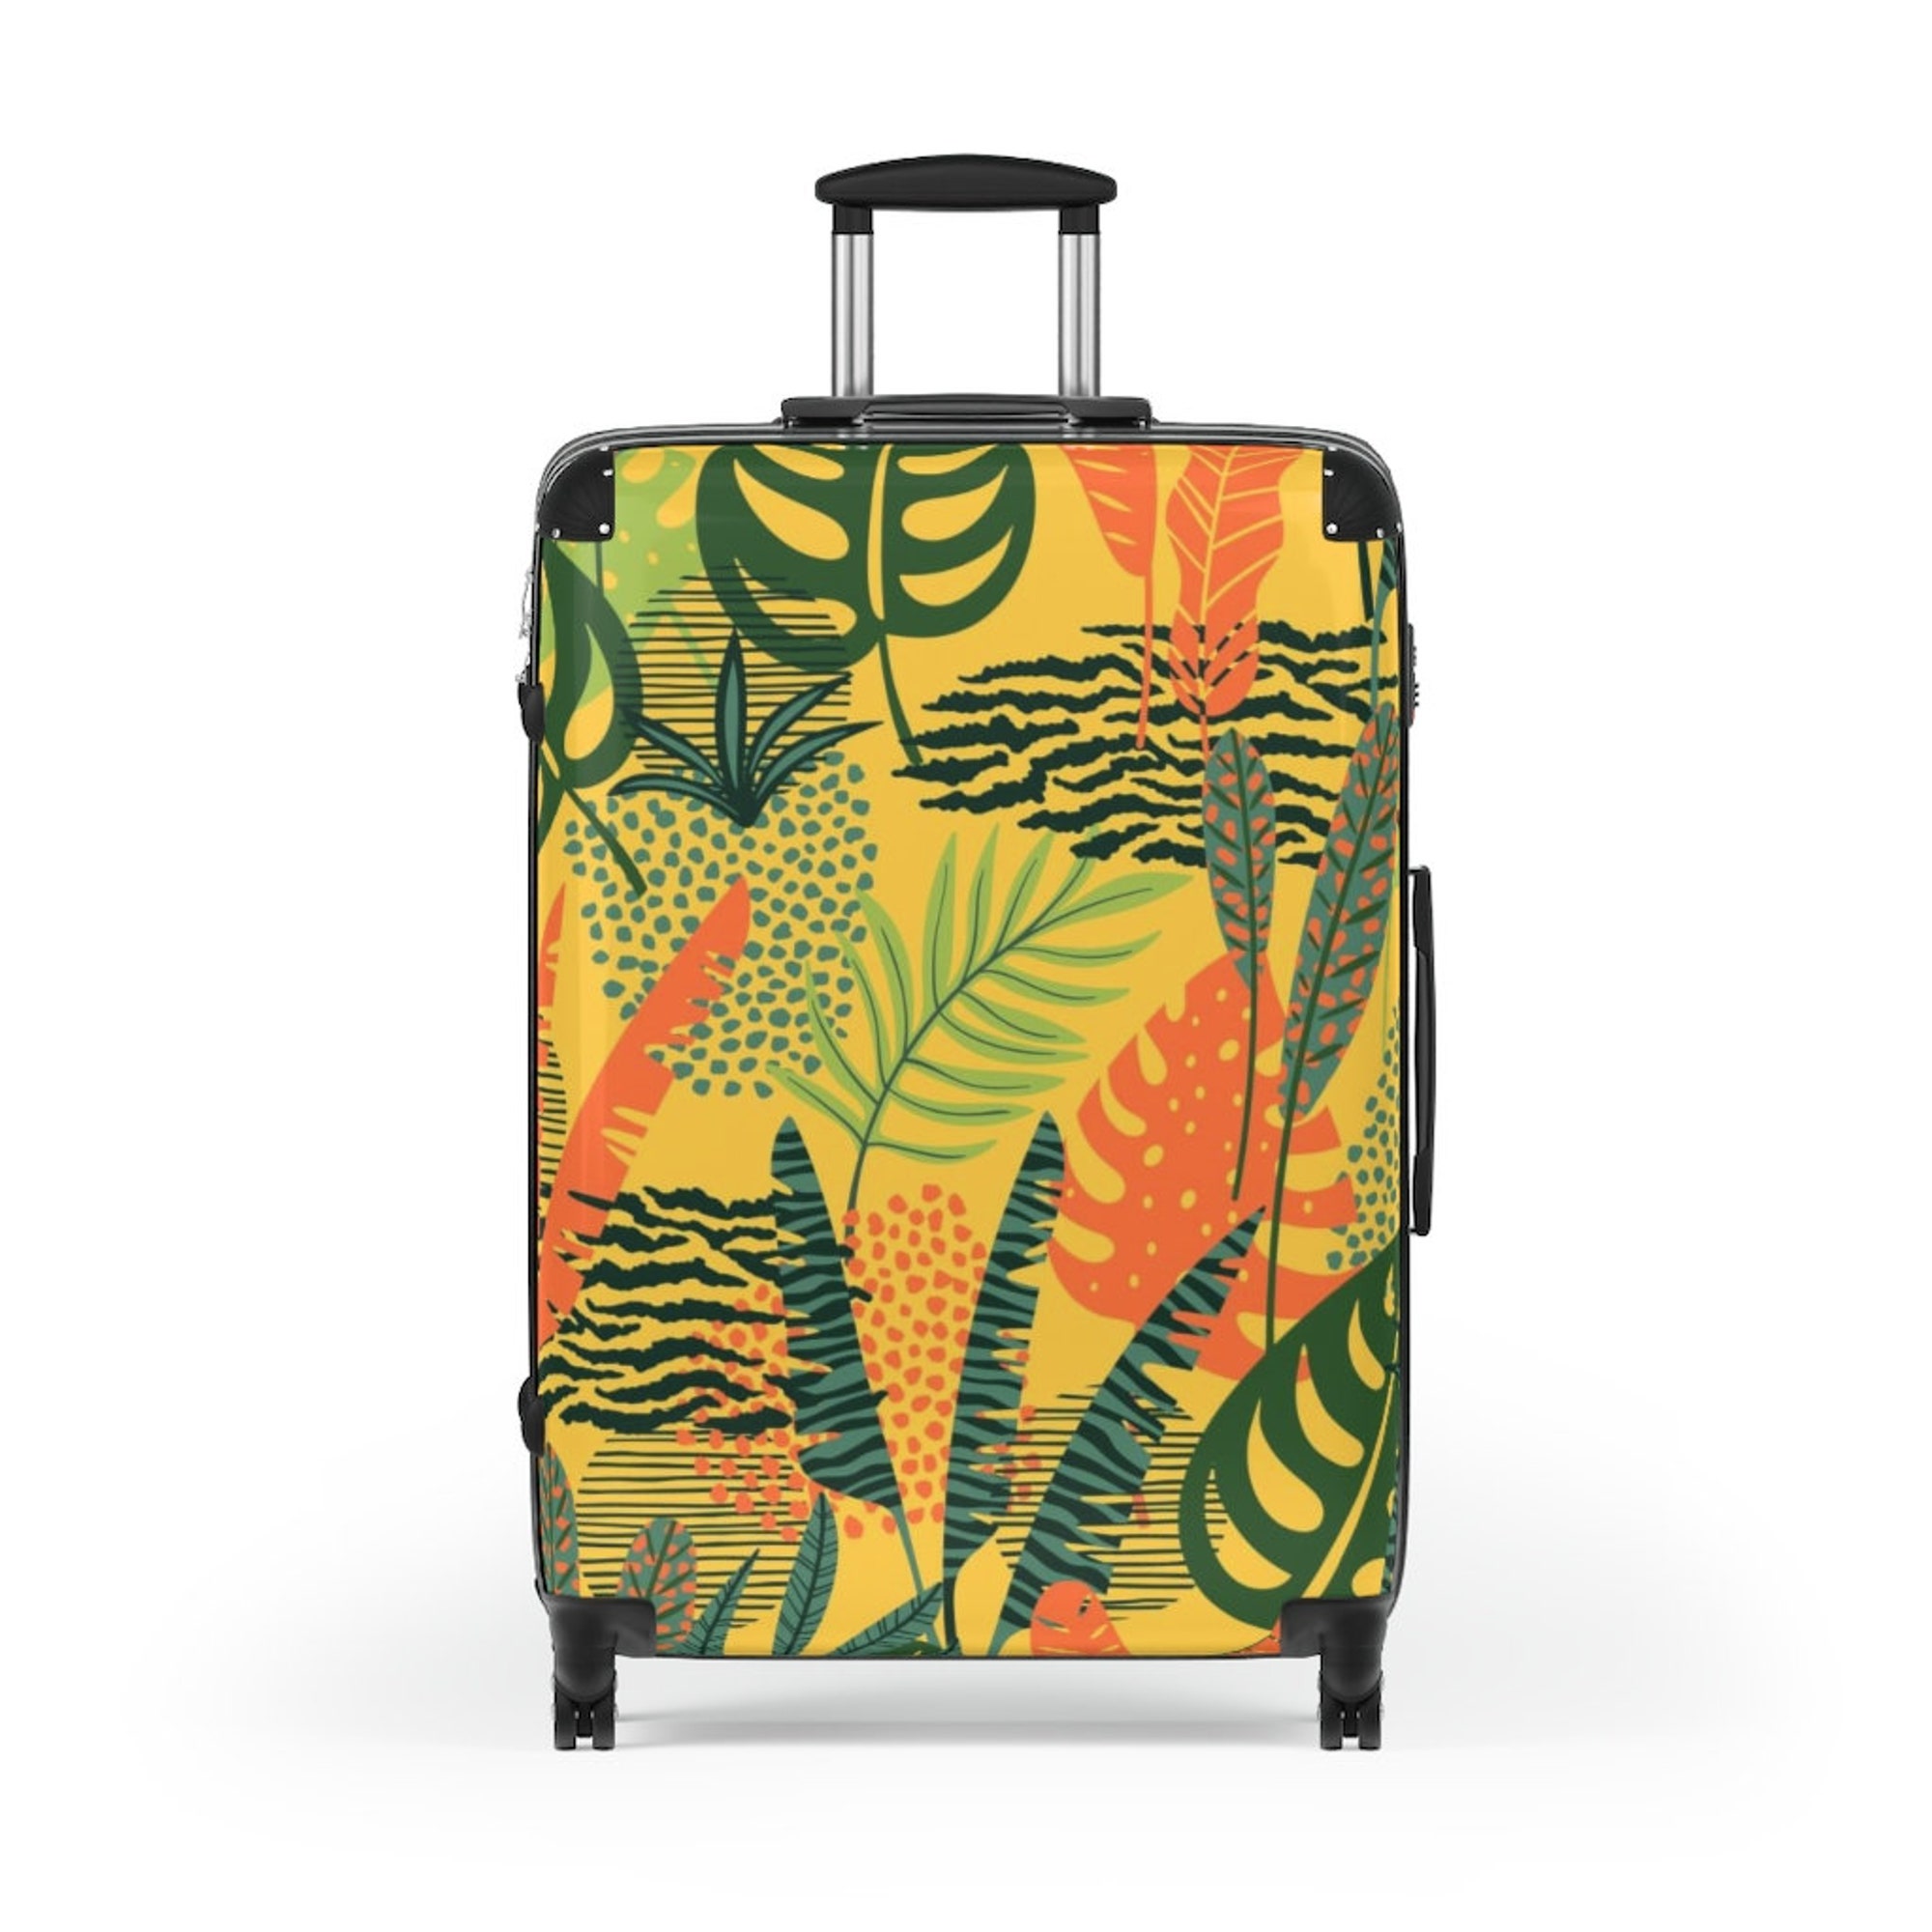 Discover The Sylvinia Suitcase